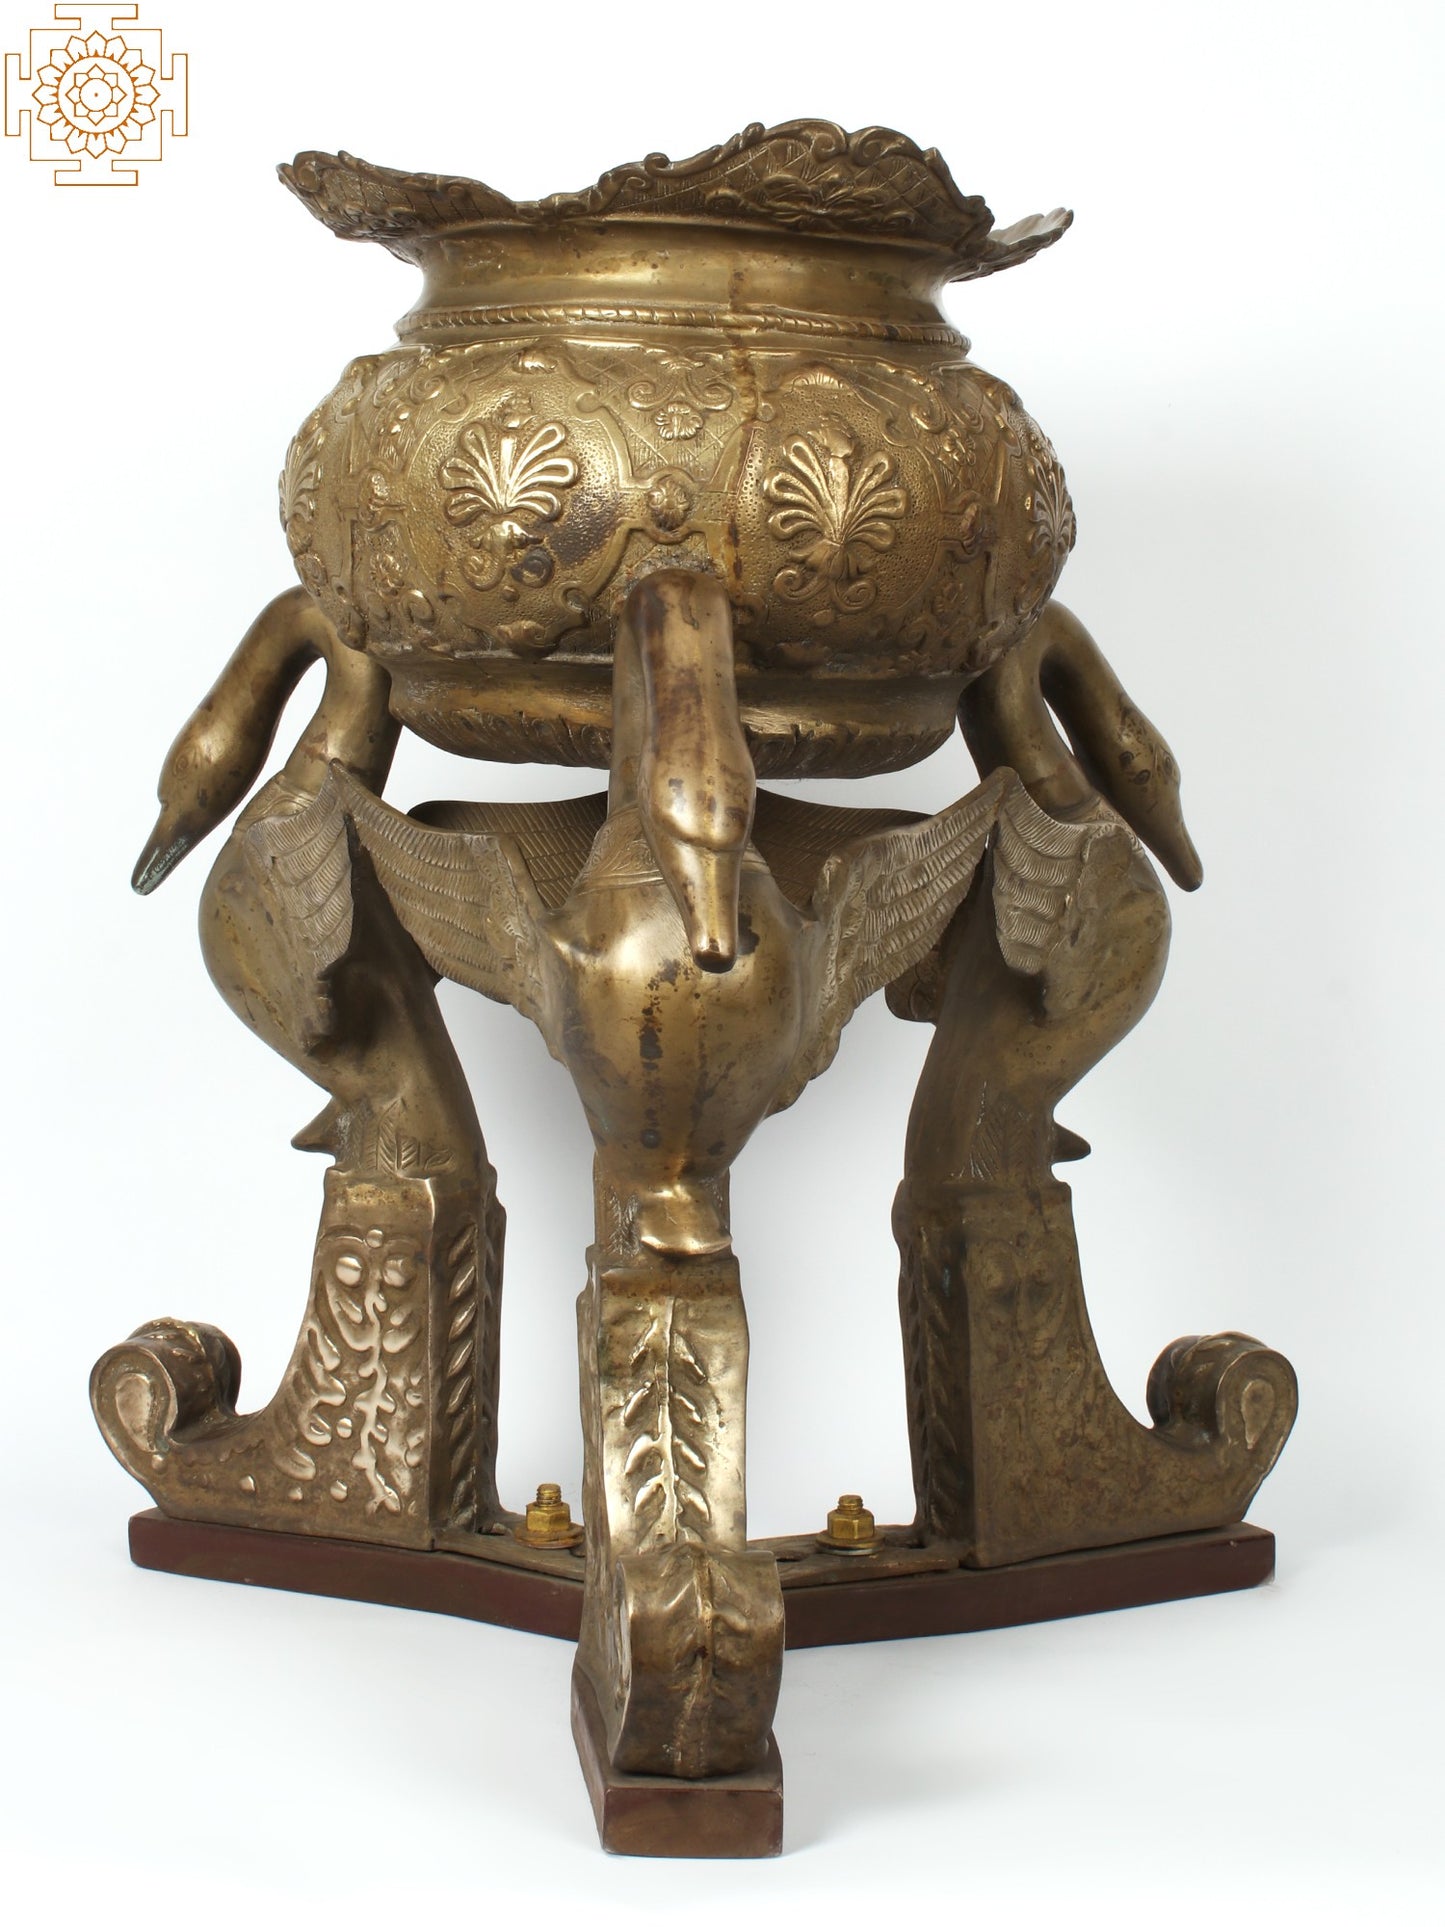 27" Brass Vintage Urli Pot on The Back of Swans